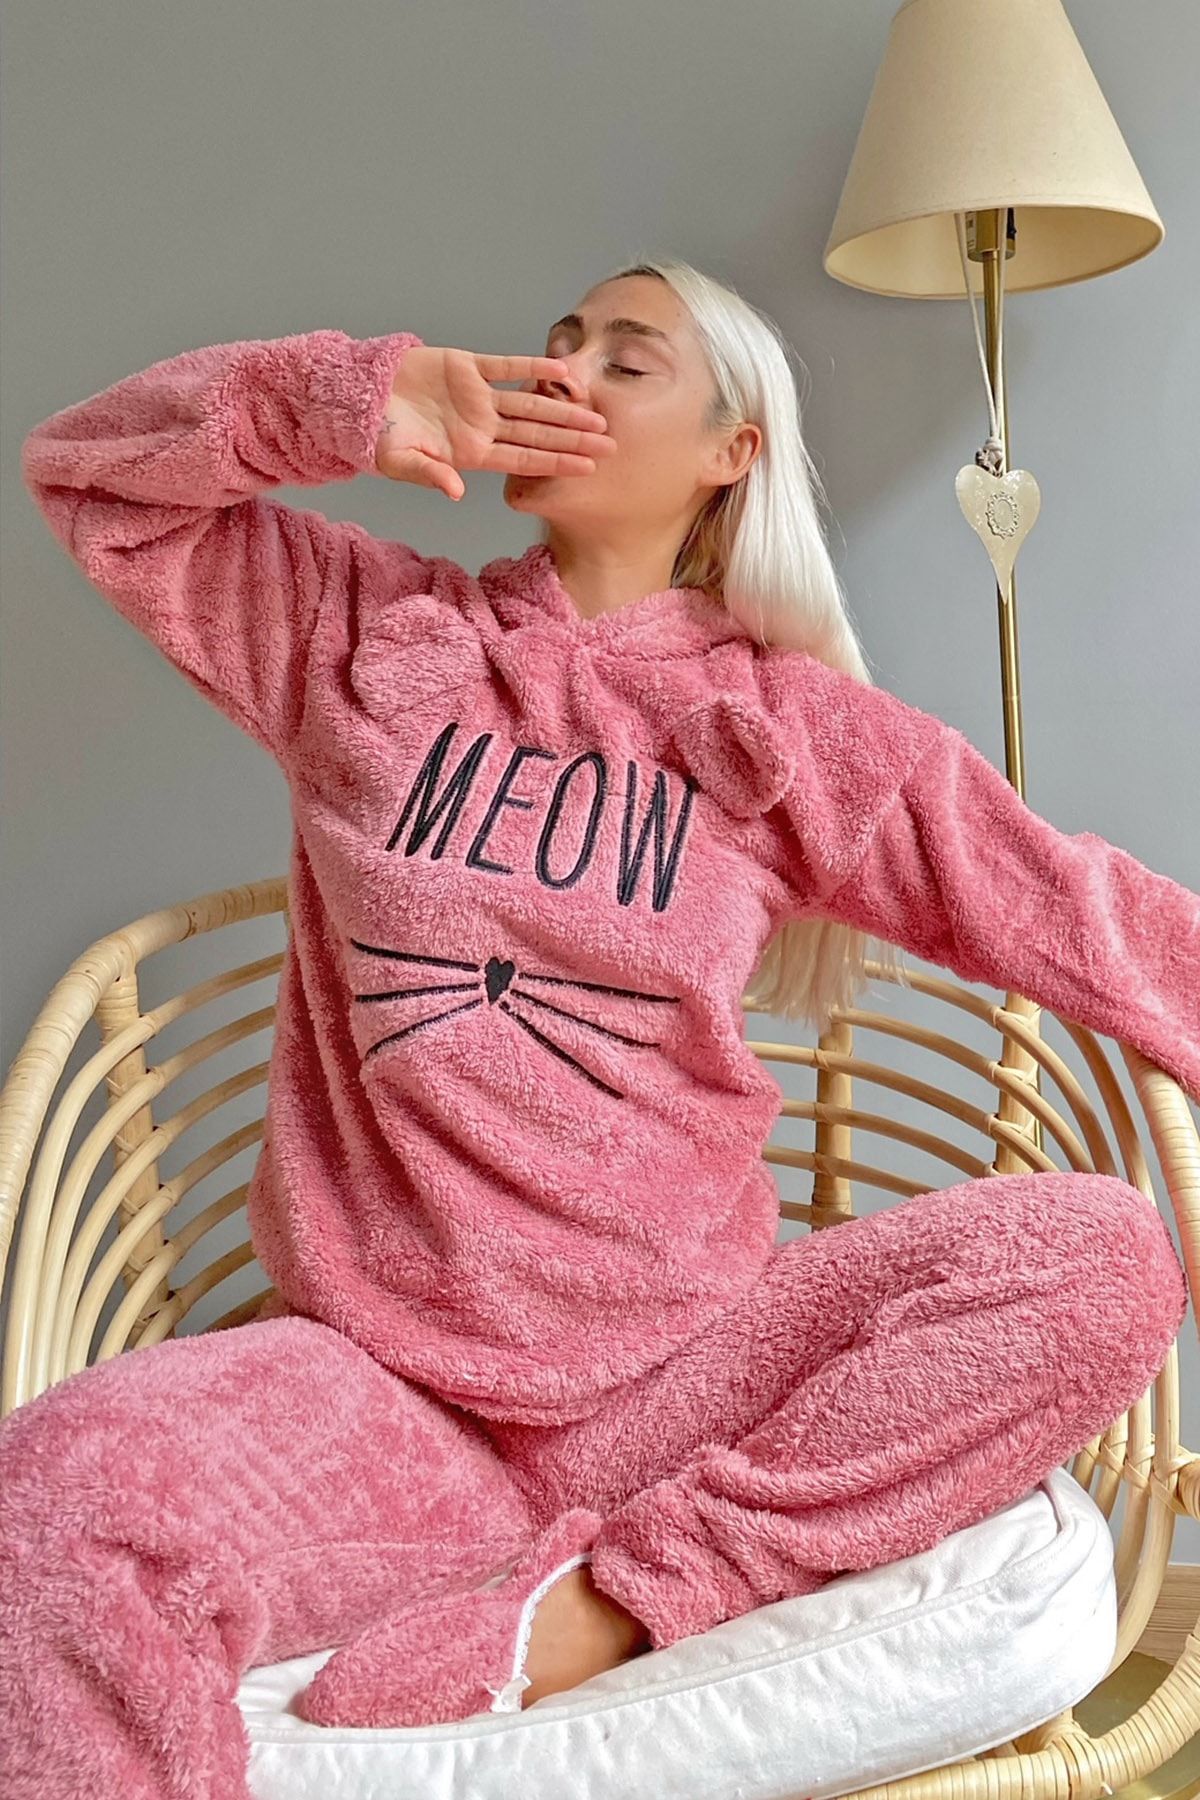 Pijamaevi Kadın Pembe Meow Desenli Tam Peluş Pijama Takımı